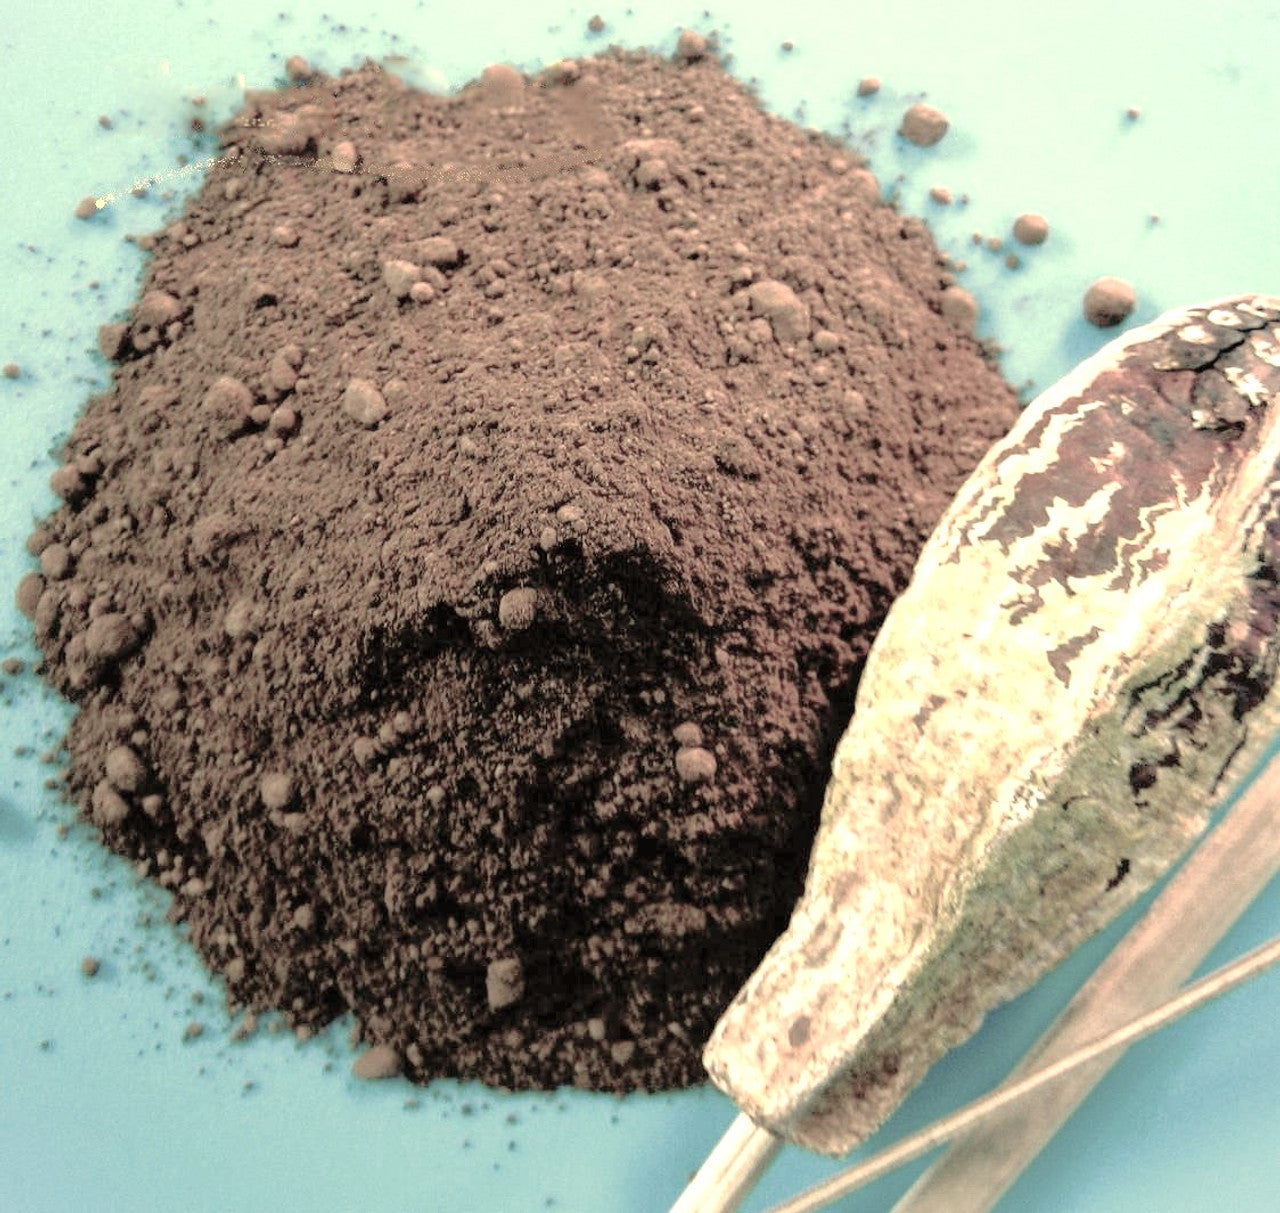 CocoaSupply Royal Mahogany -Dutched (alkalized) 20/22 Cacao Powder